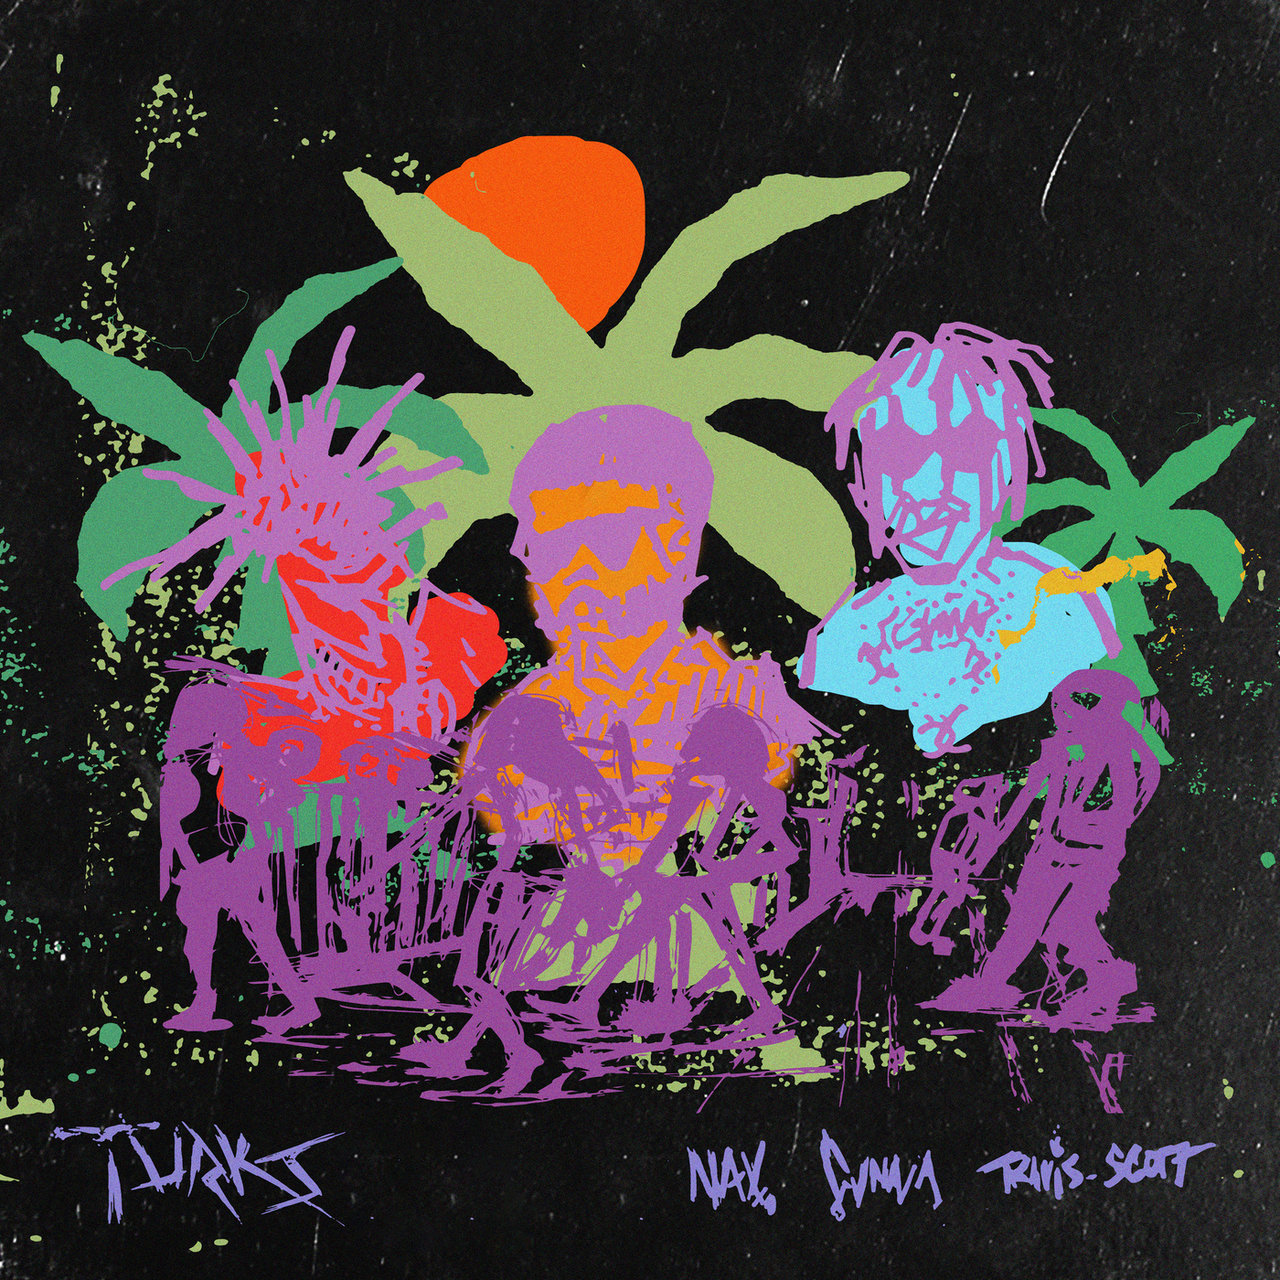 Nav and Gunna - Turks (ft. Travis Scott) (Cover)